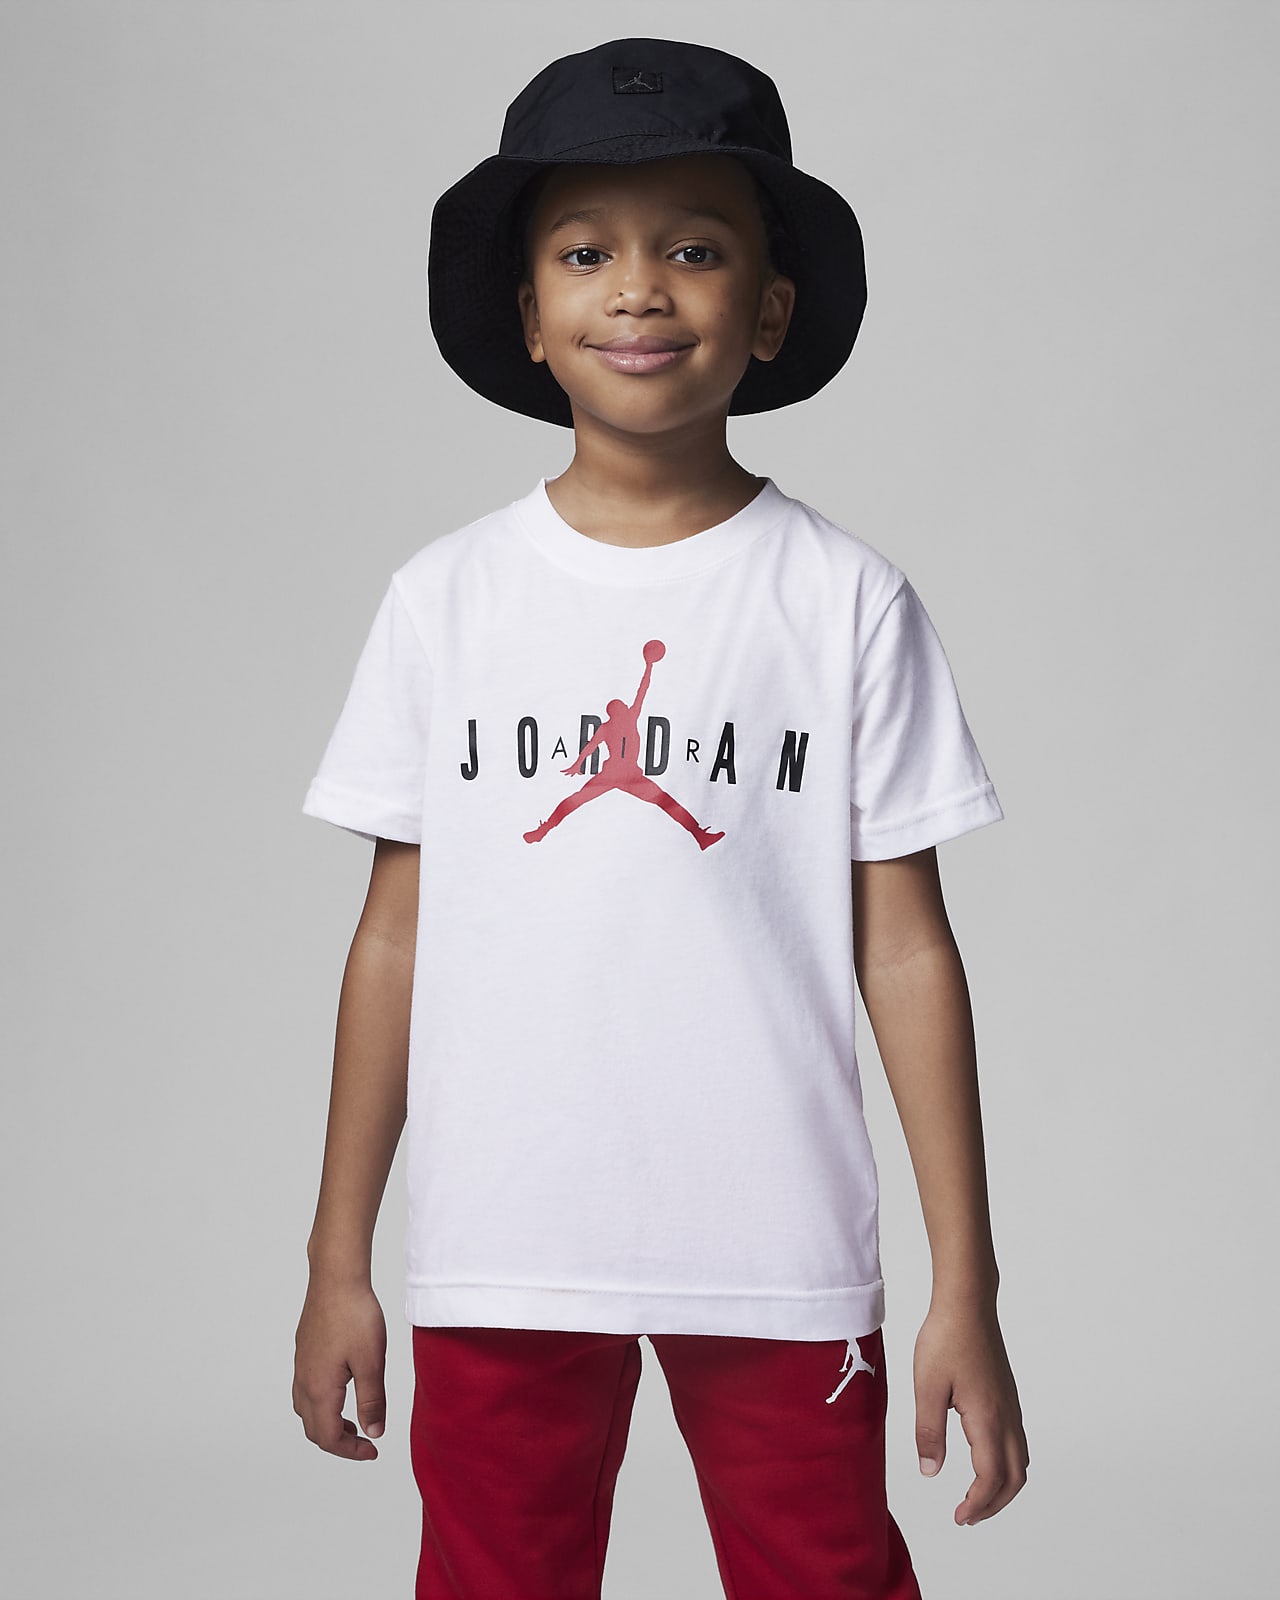 Jordan Camiseta - Niño/a pequeño/a. Nike ES